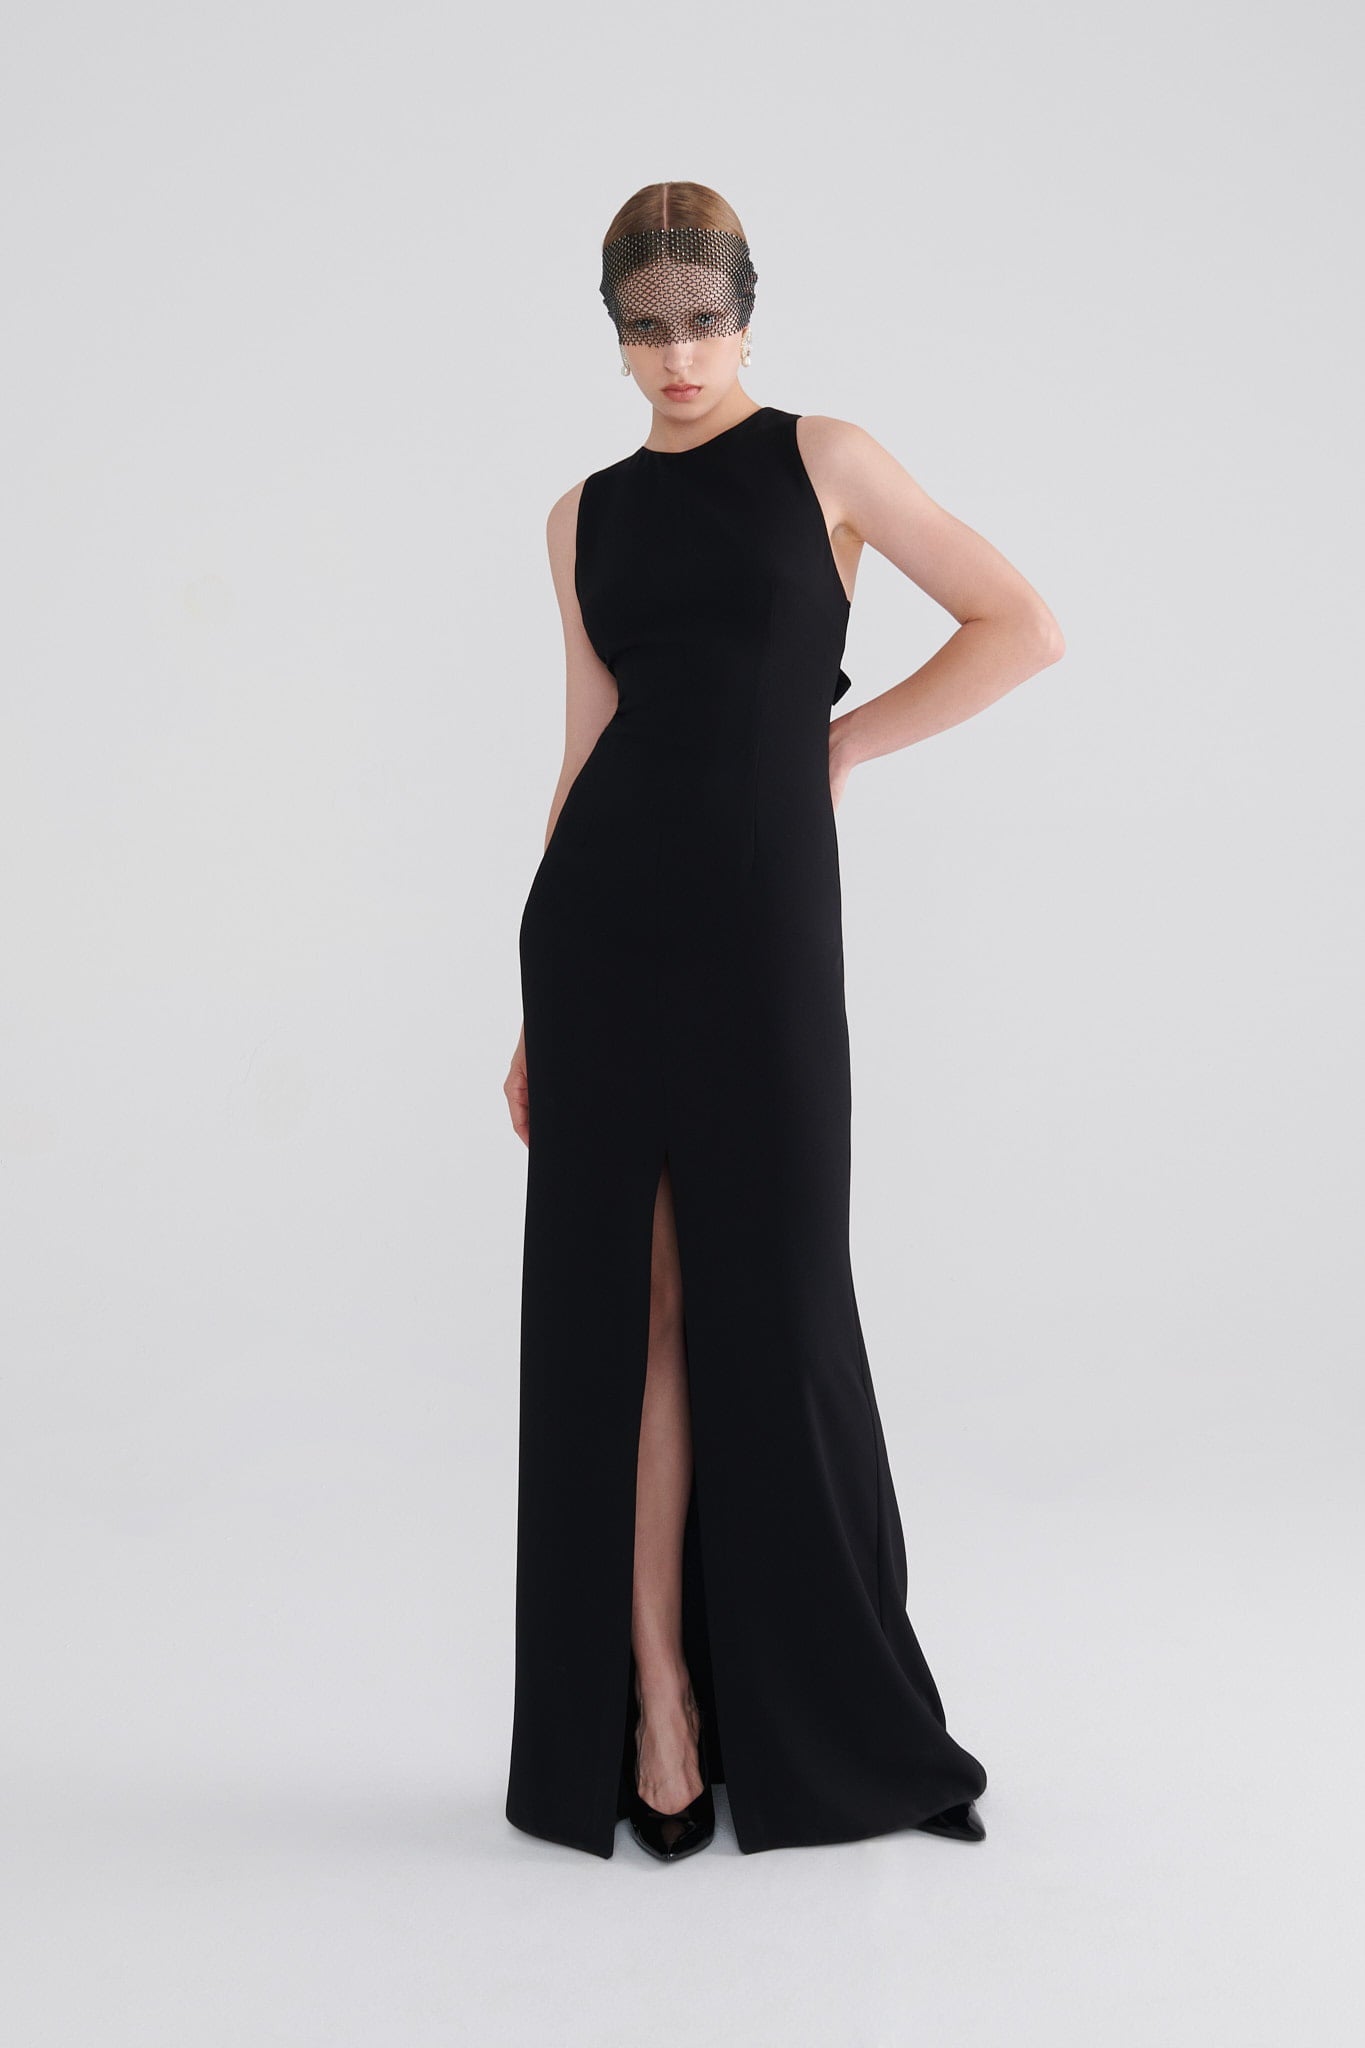 Roman Elegant Backless Black Evening Gown. 2